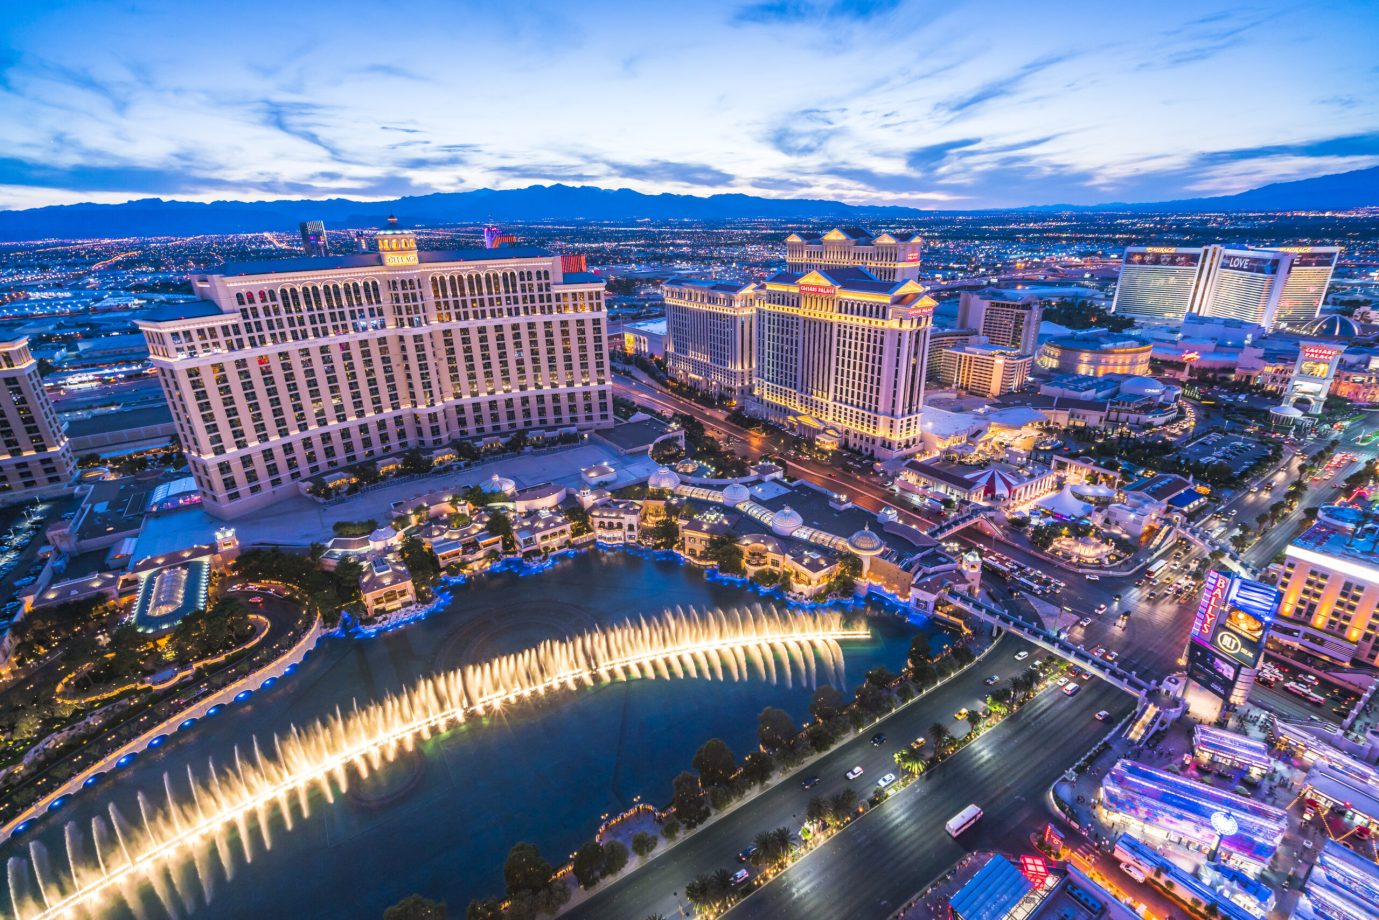 Aerial view of Las Vegas Strip near Bellagio